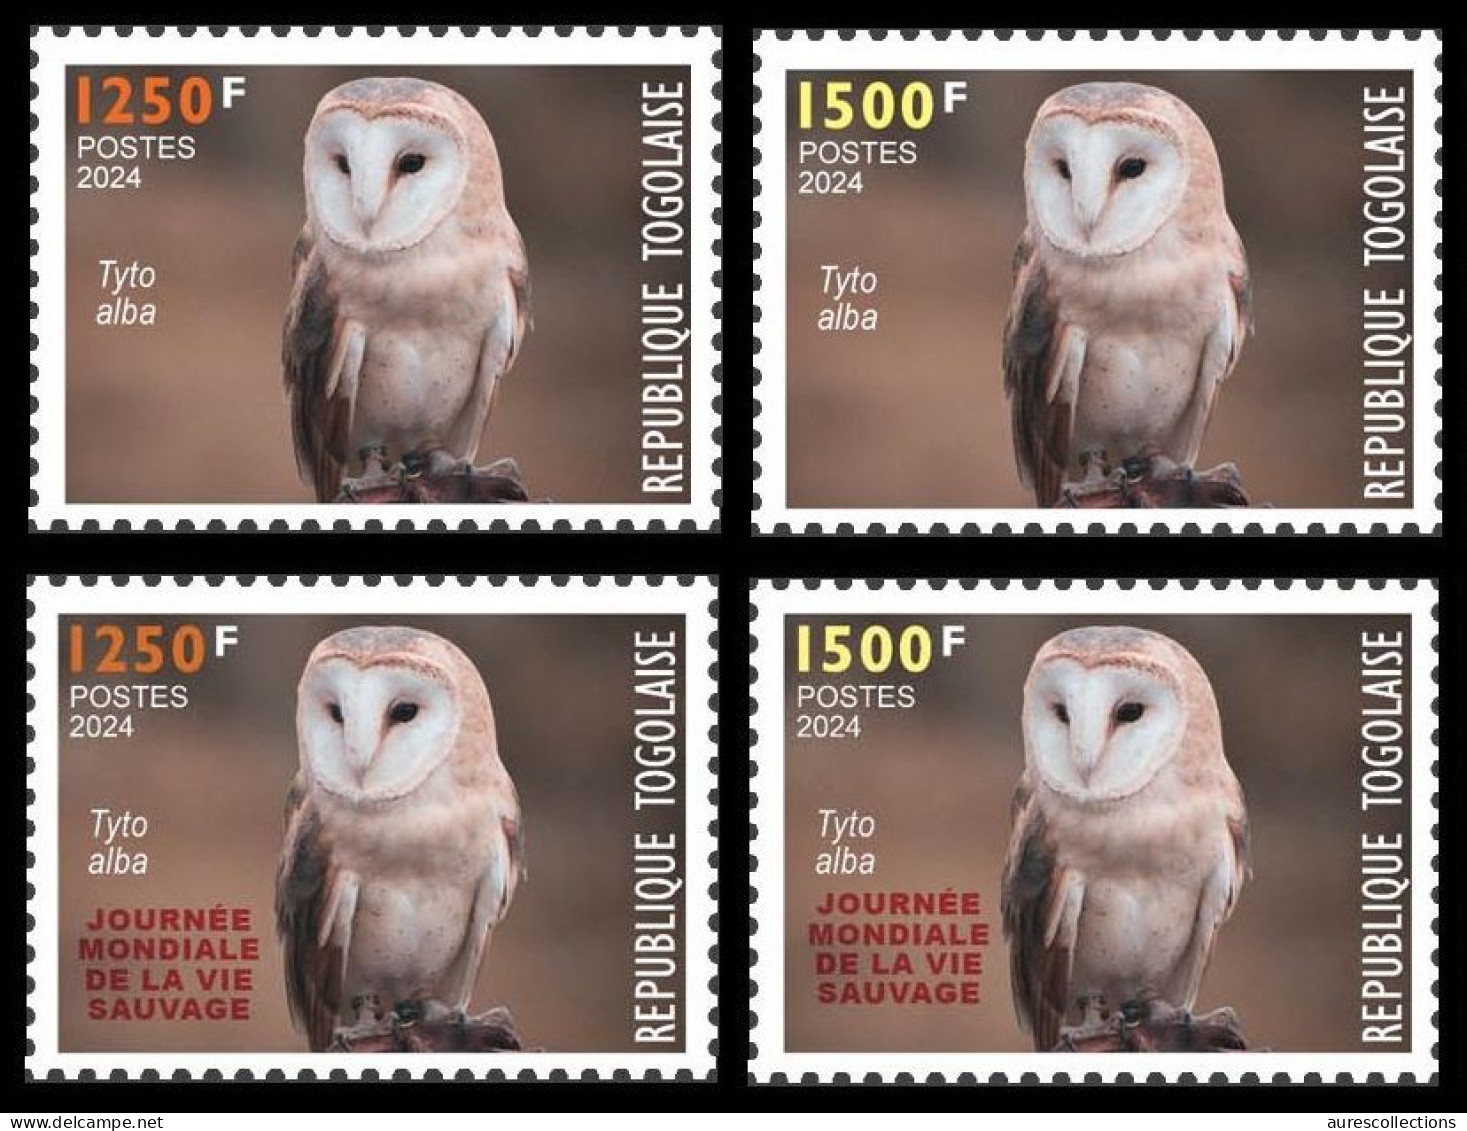 TOGO 2024 SET 4V - REGULAR & OVERPRINT - OWLS OWL HIBOU HIBOUX BIRDS OISEAUX - BIODIVERSITY BIODIVERSITE - MNH - Uilen